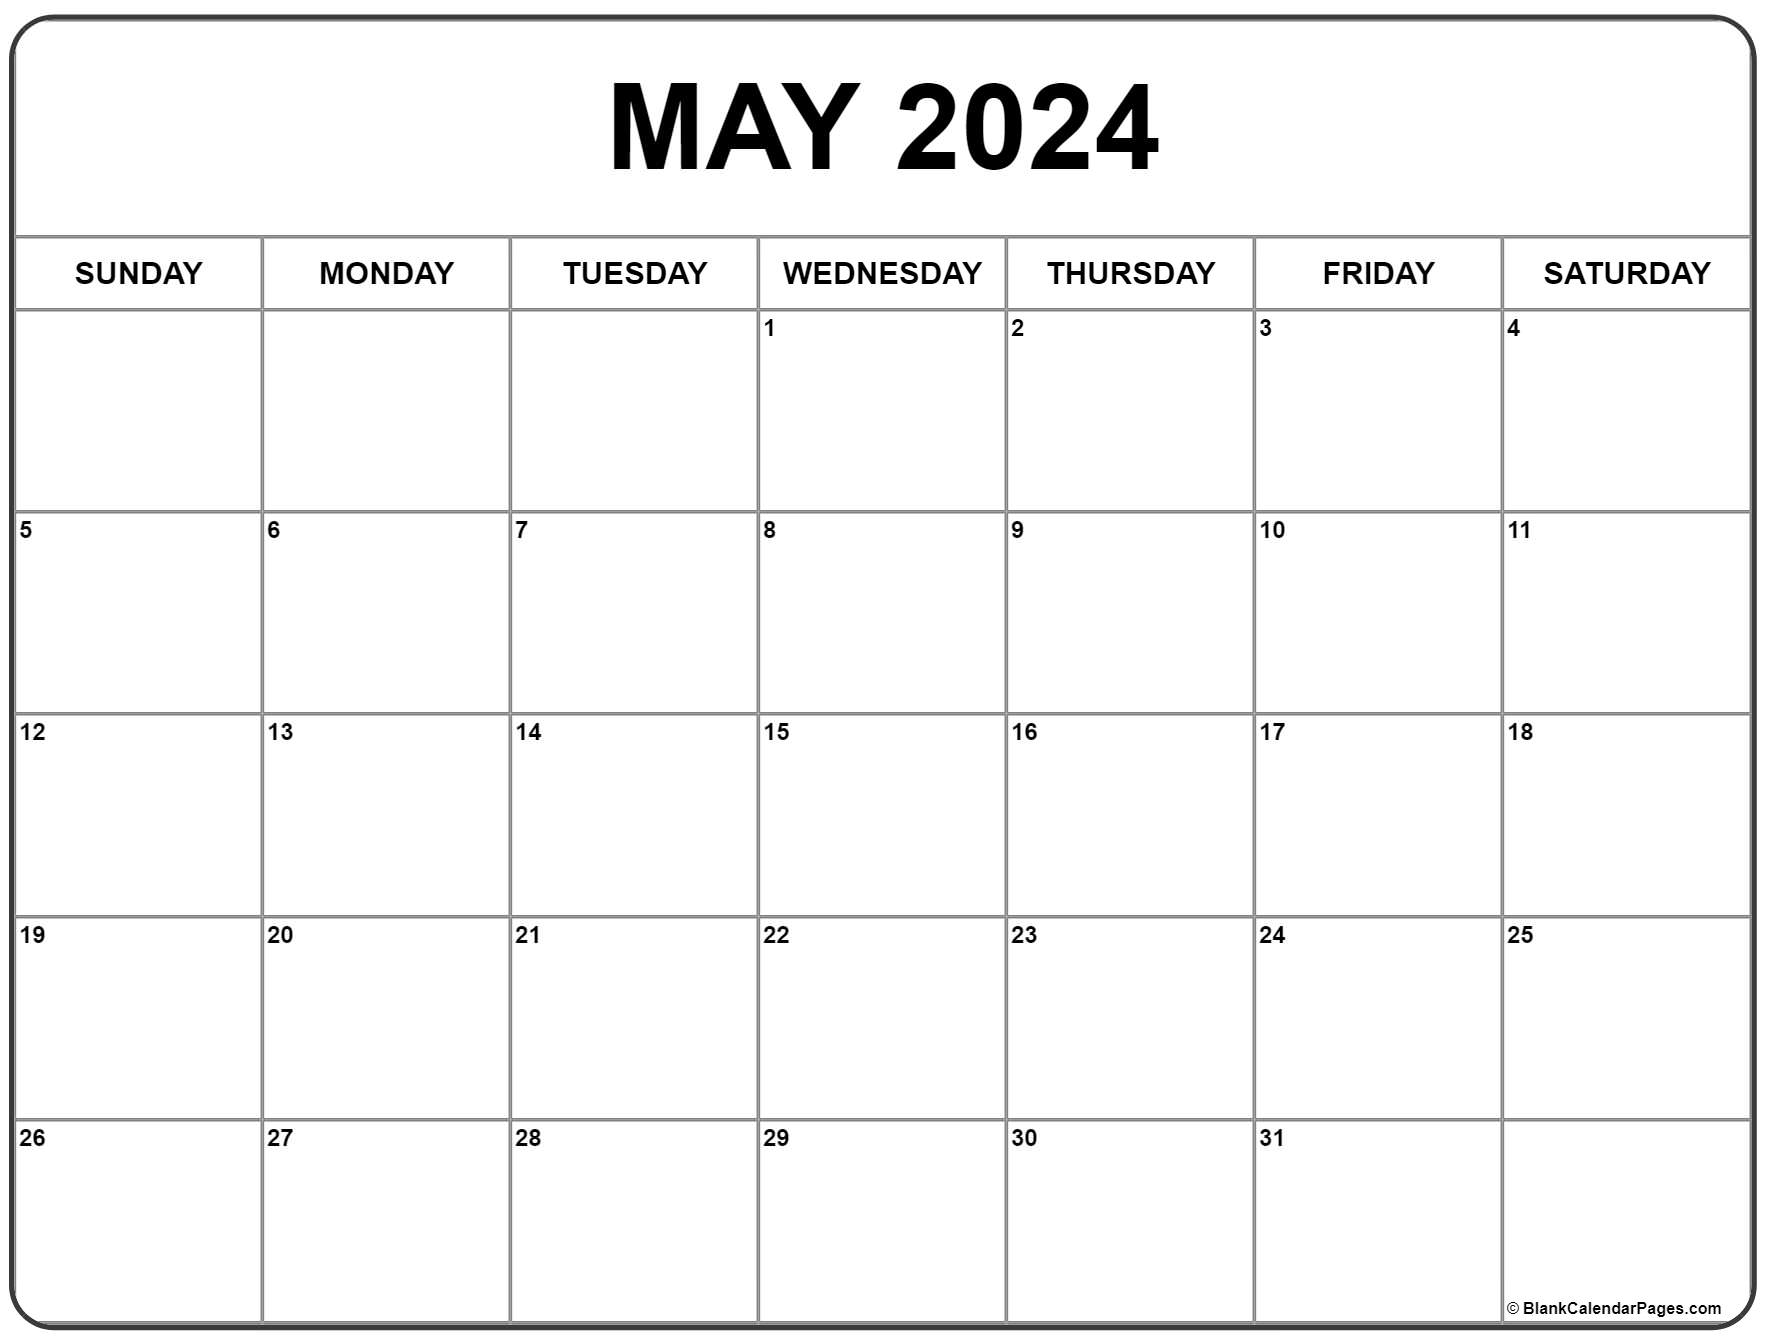 May 2024 Calendar | Free Printable Calendar for Printable Monthly Calendar May 2024